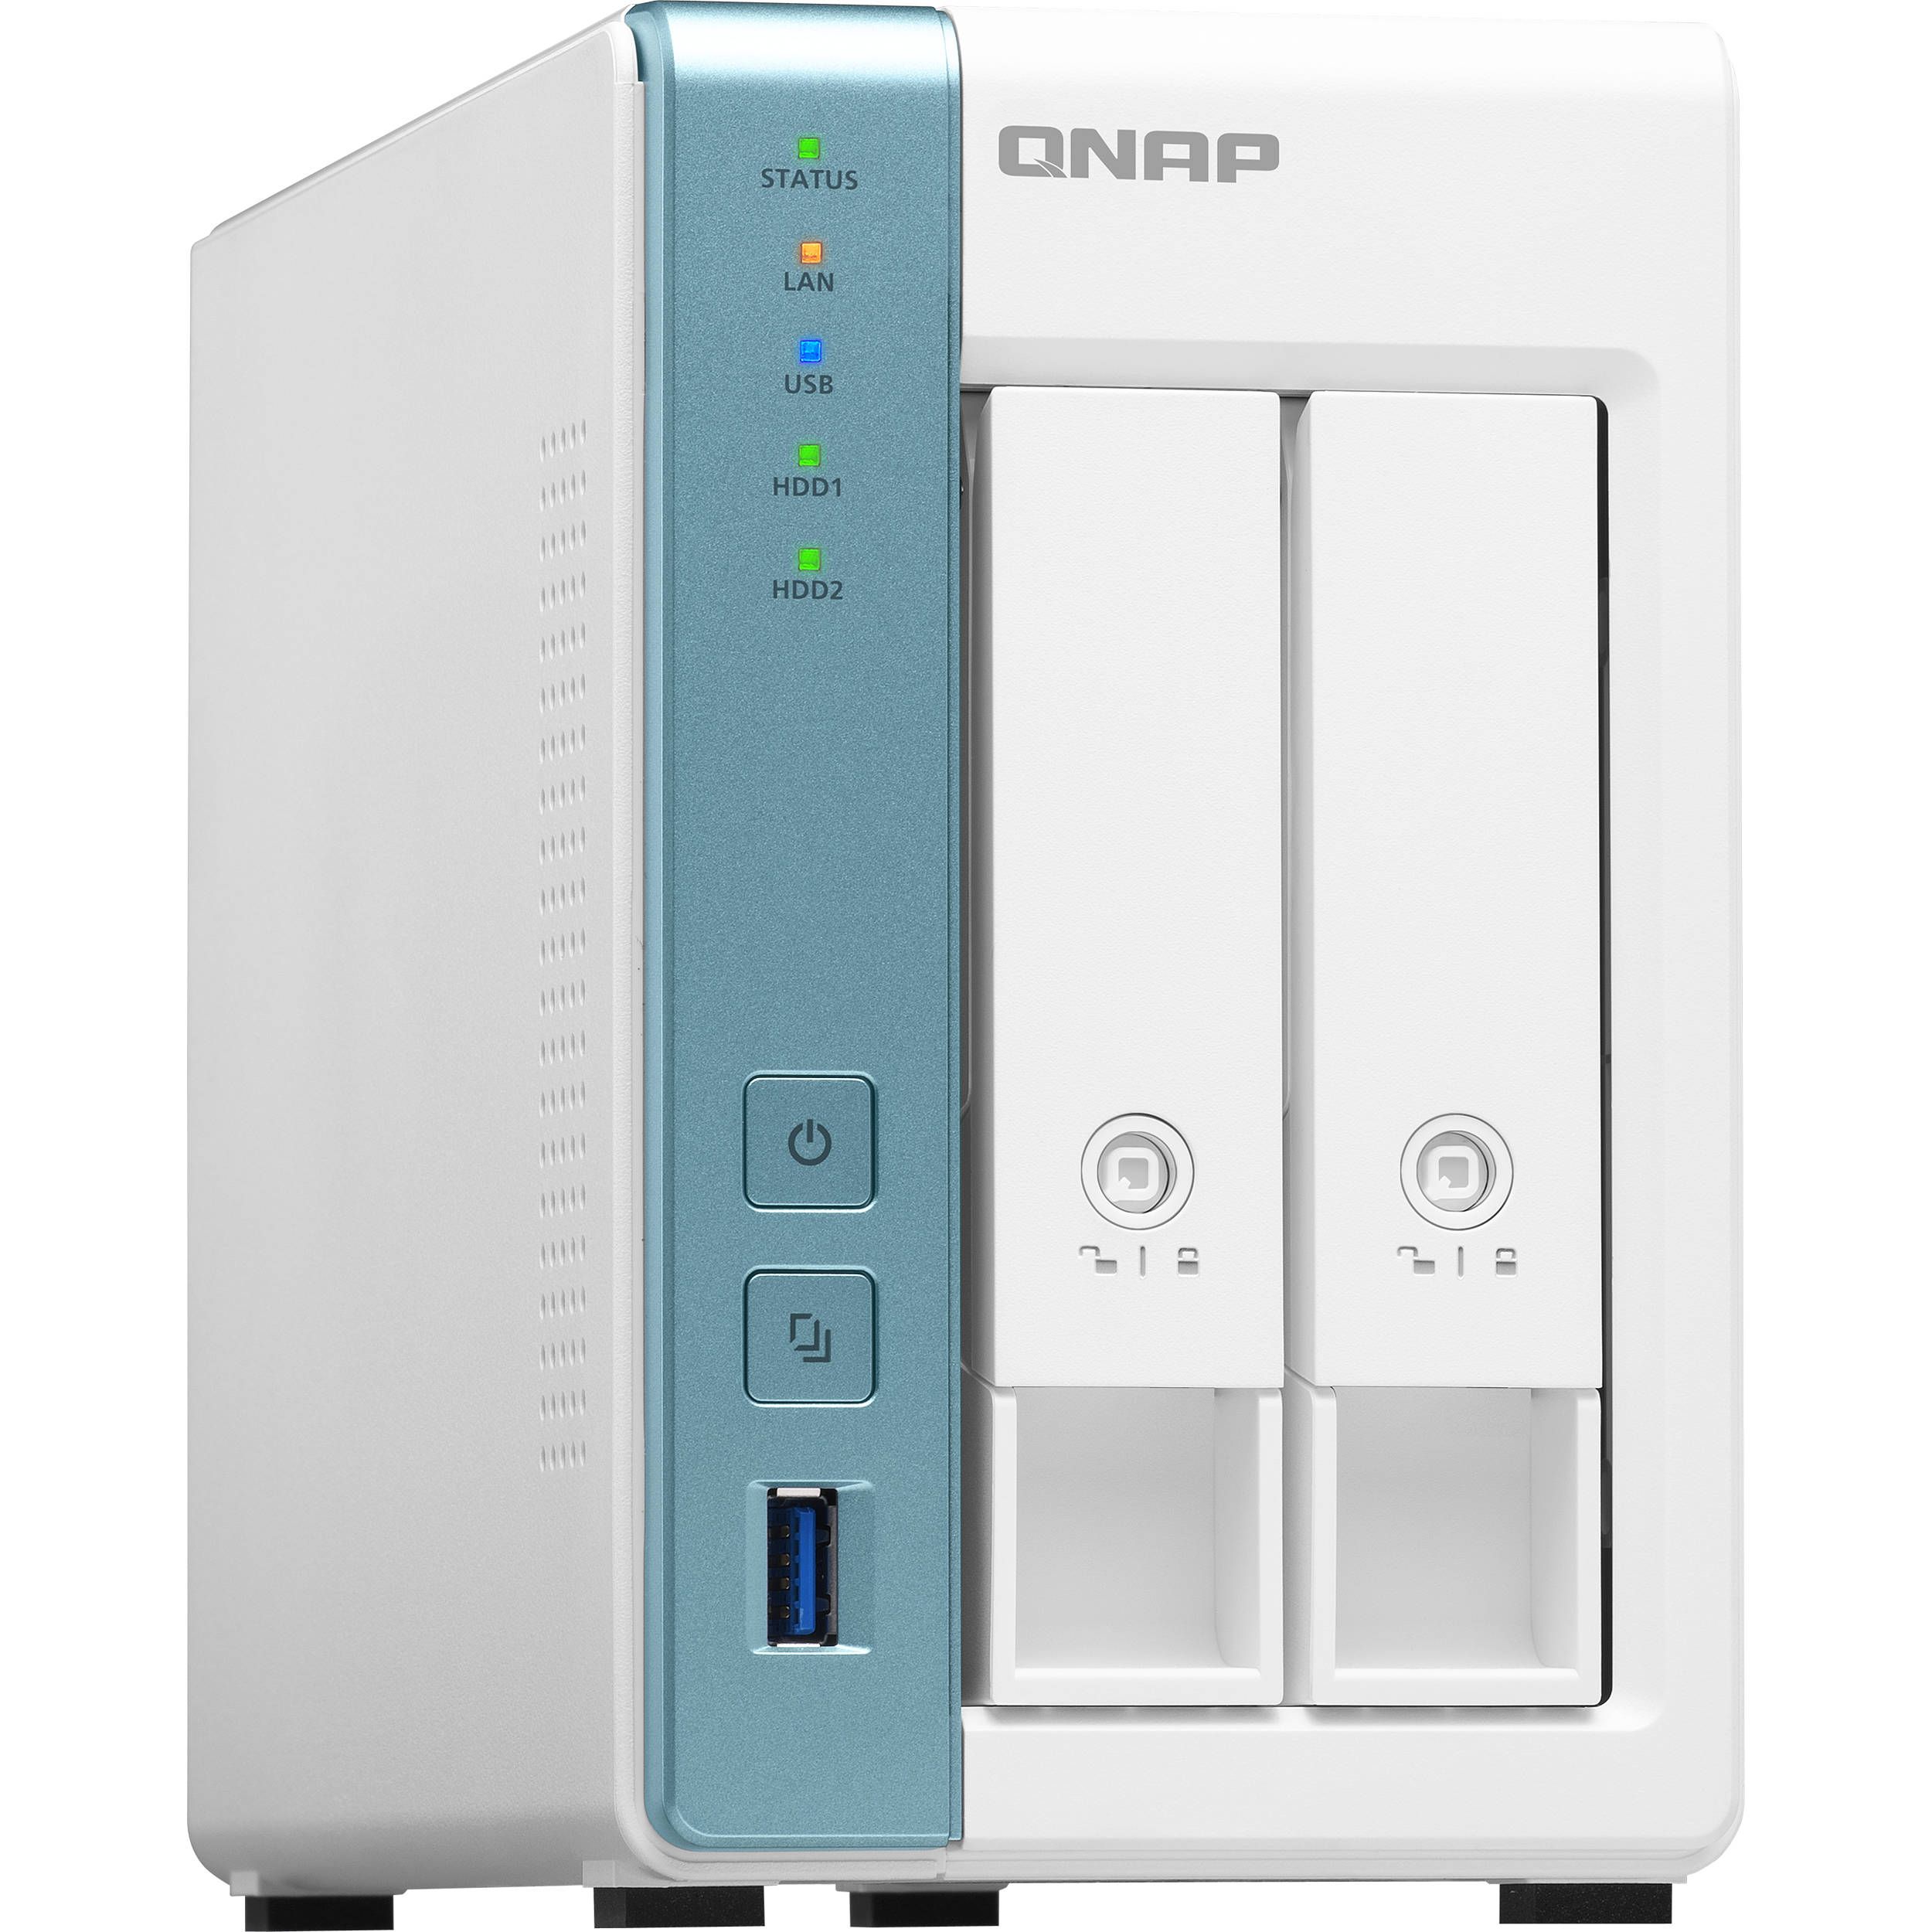 NAS QNAP 231K 2-Bay, CPU Annapurna Labs Alpine AL-214 1.7GHz Quad Core, 1GB, 2.5/3.5 SATA 6Gbps HDD (neincluse), 2 GigaLan LAN 3xUSB 3.0, tower, adaptor alimentare, garantie 2 ani_2